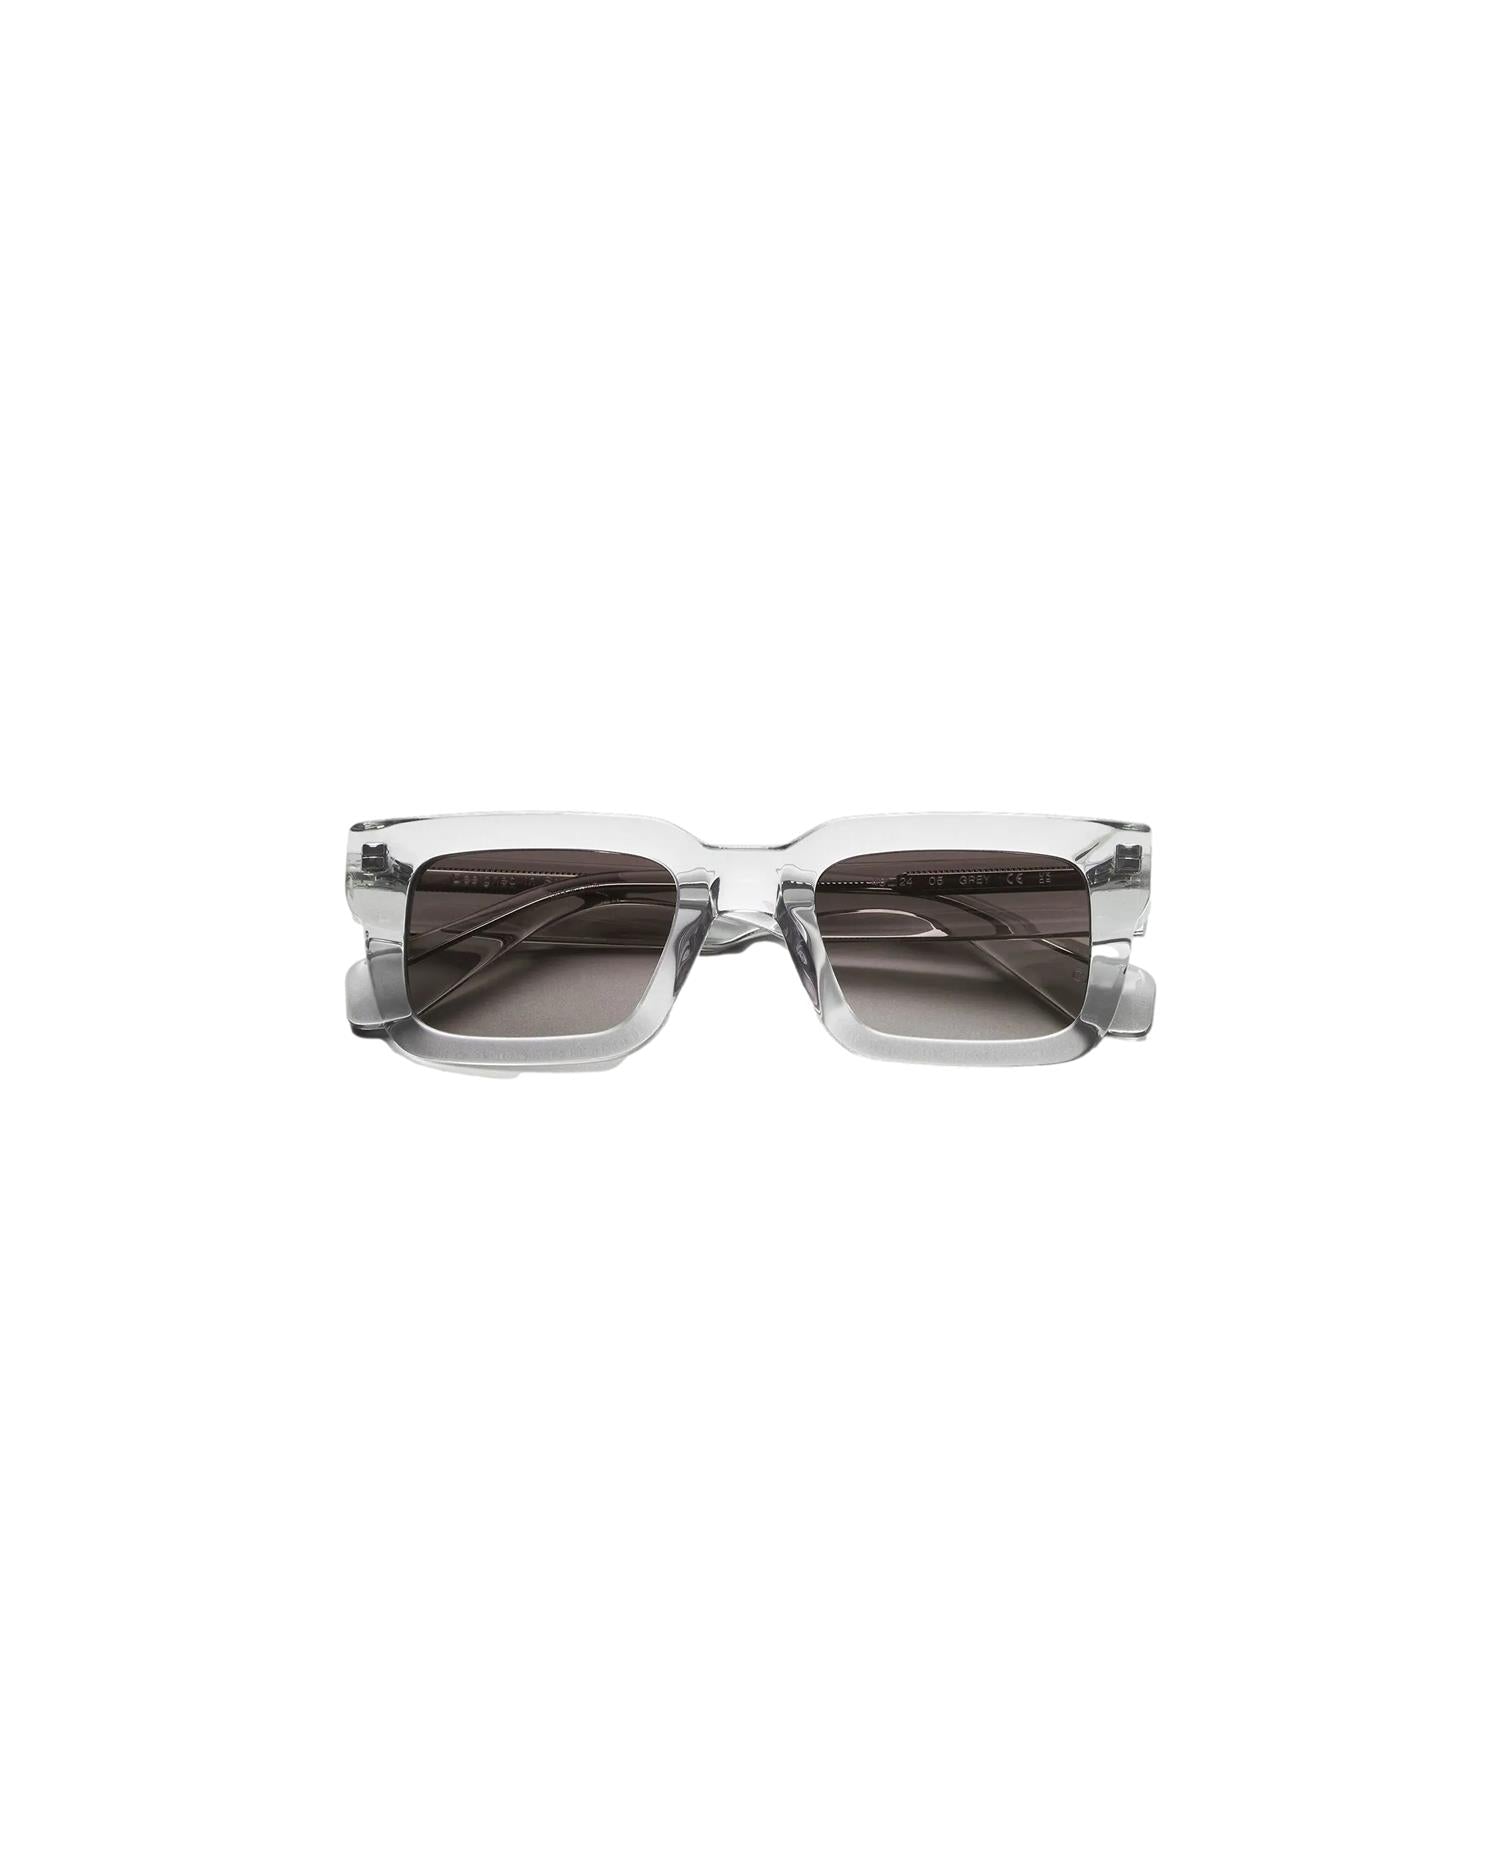 Chimi Eyewear 05 Grey Solbriller Grå